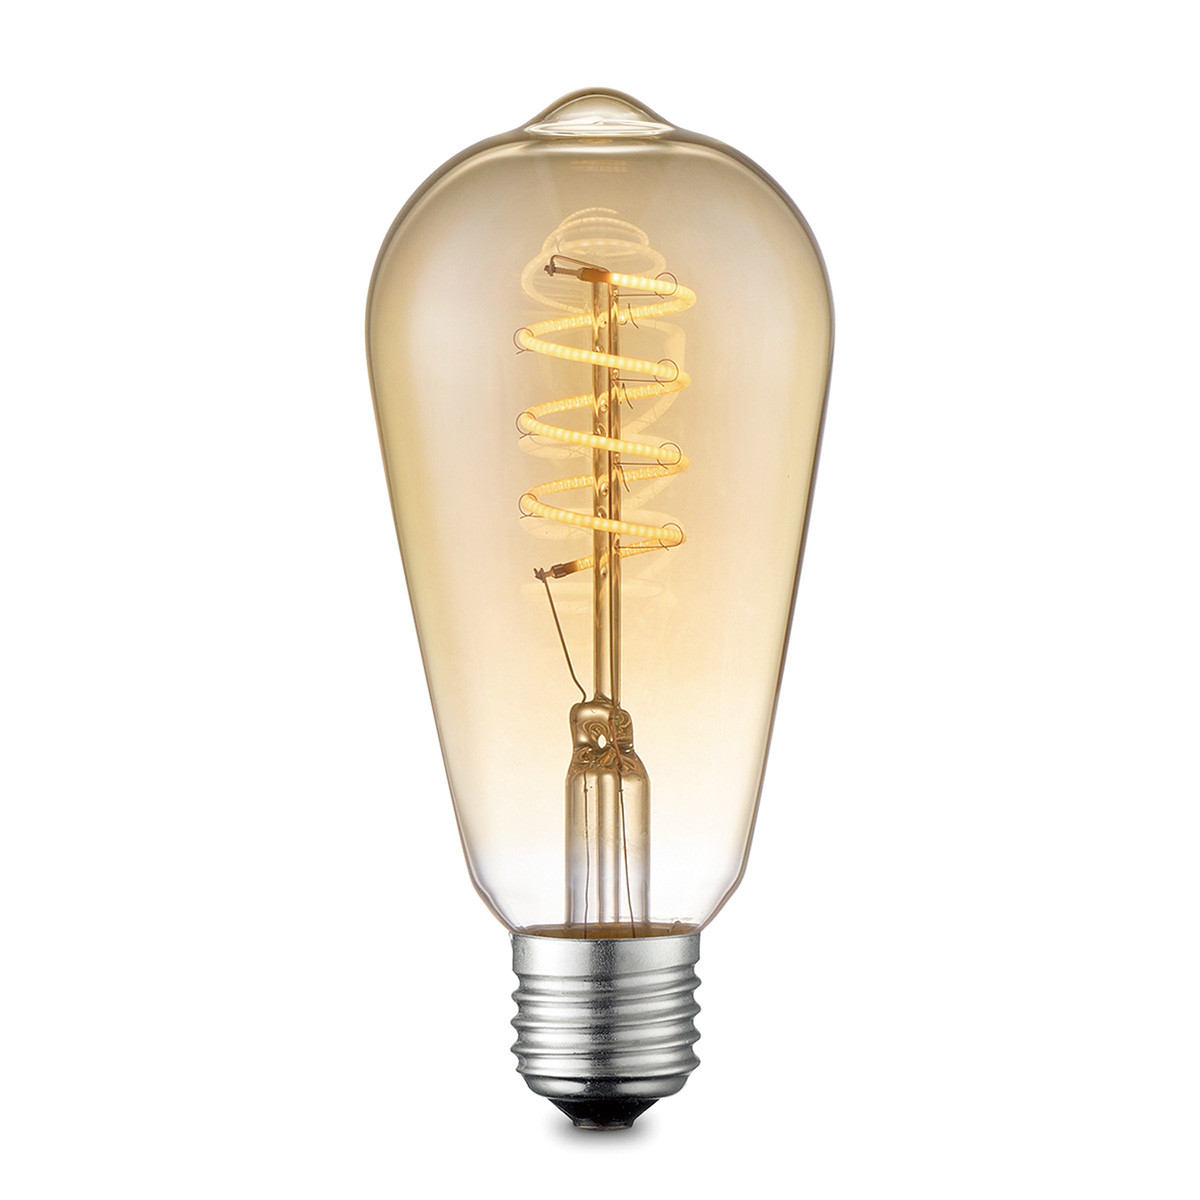 Edison Vintage LED lamp E27 LED filament lichtbron, Spiraal Drop ST64, 6.4/6.4/14cm, Amber, Retro LED lamp Dimbaar, 4W 280lm 2700K, warm wit licht, geschikt voor E27 fitting